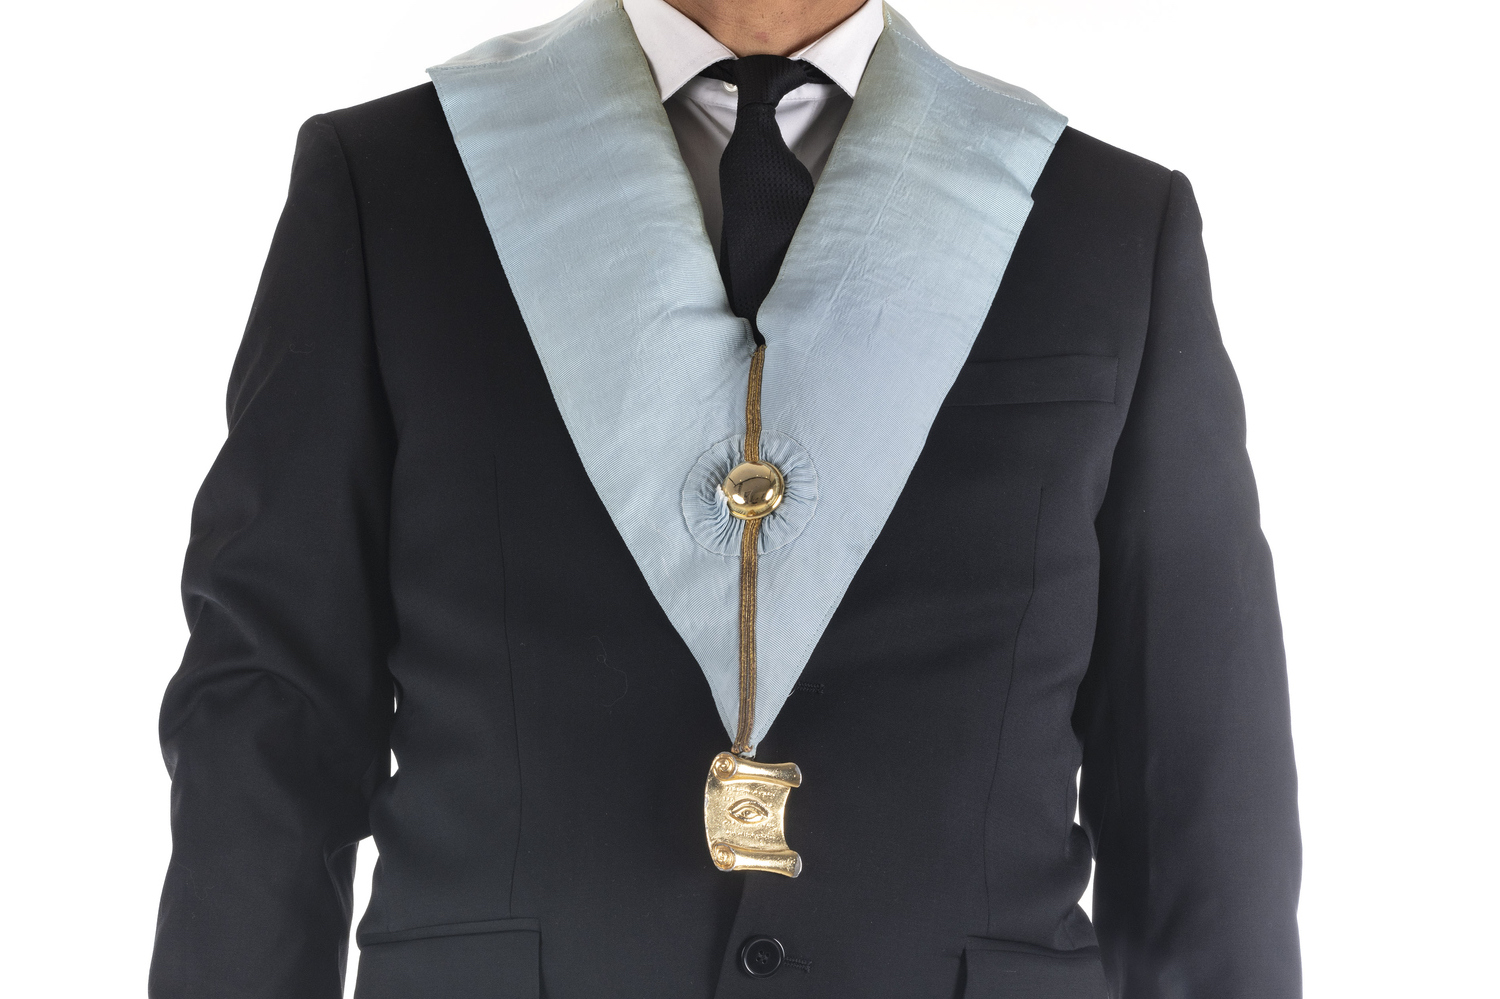 Freemason tie and regalia